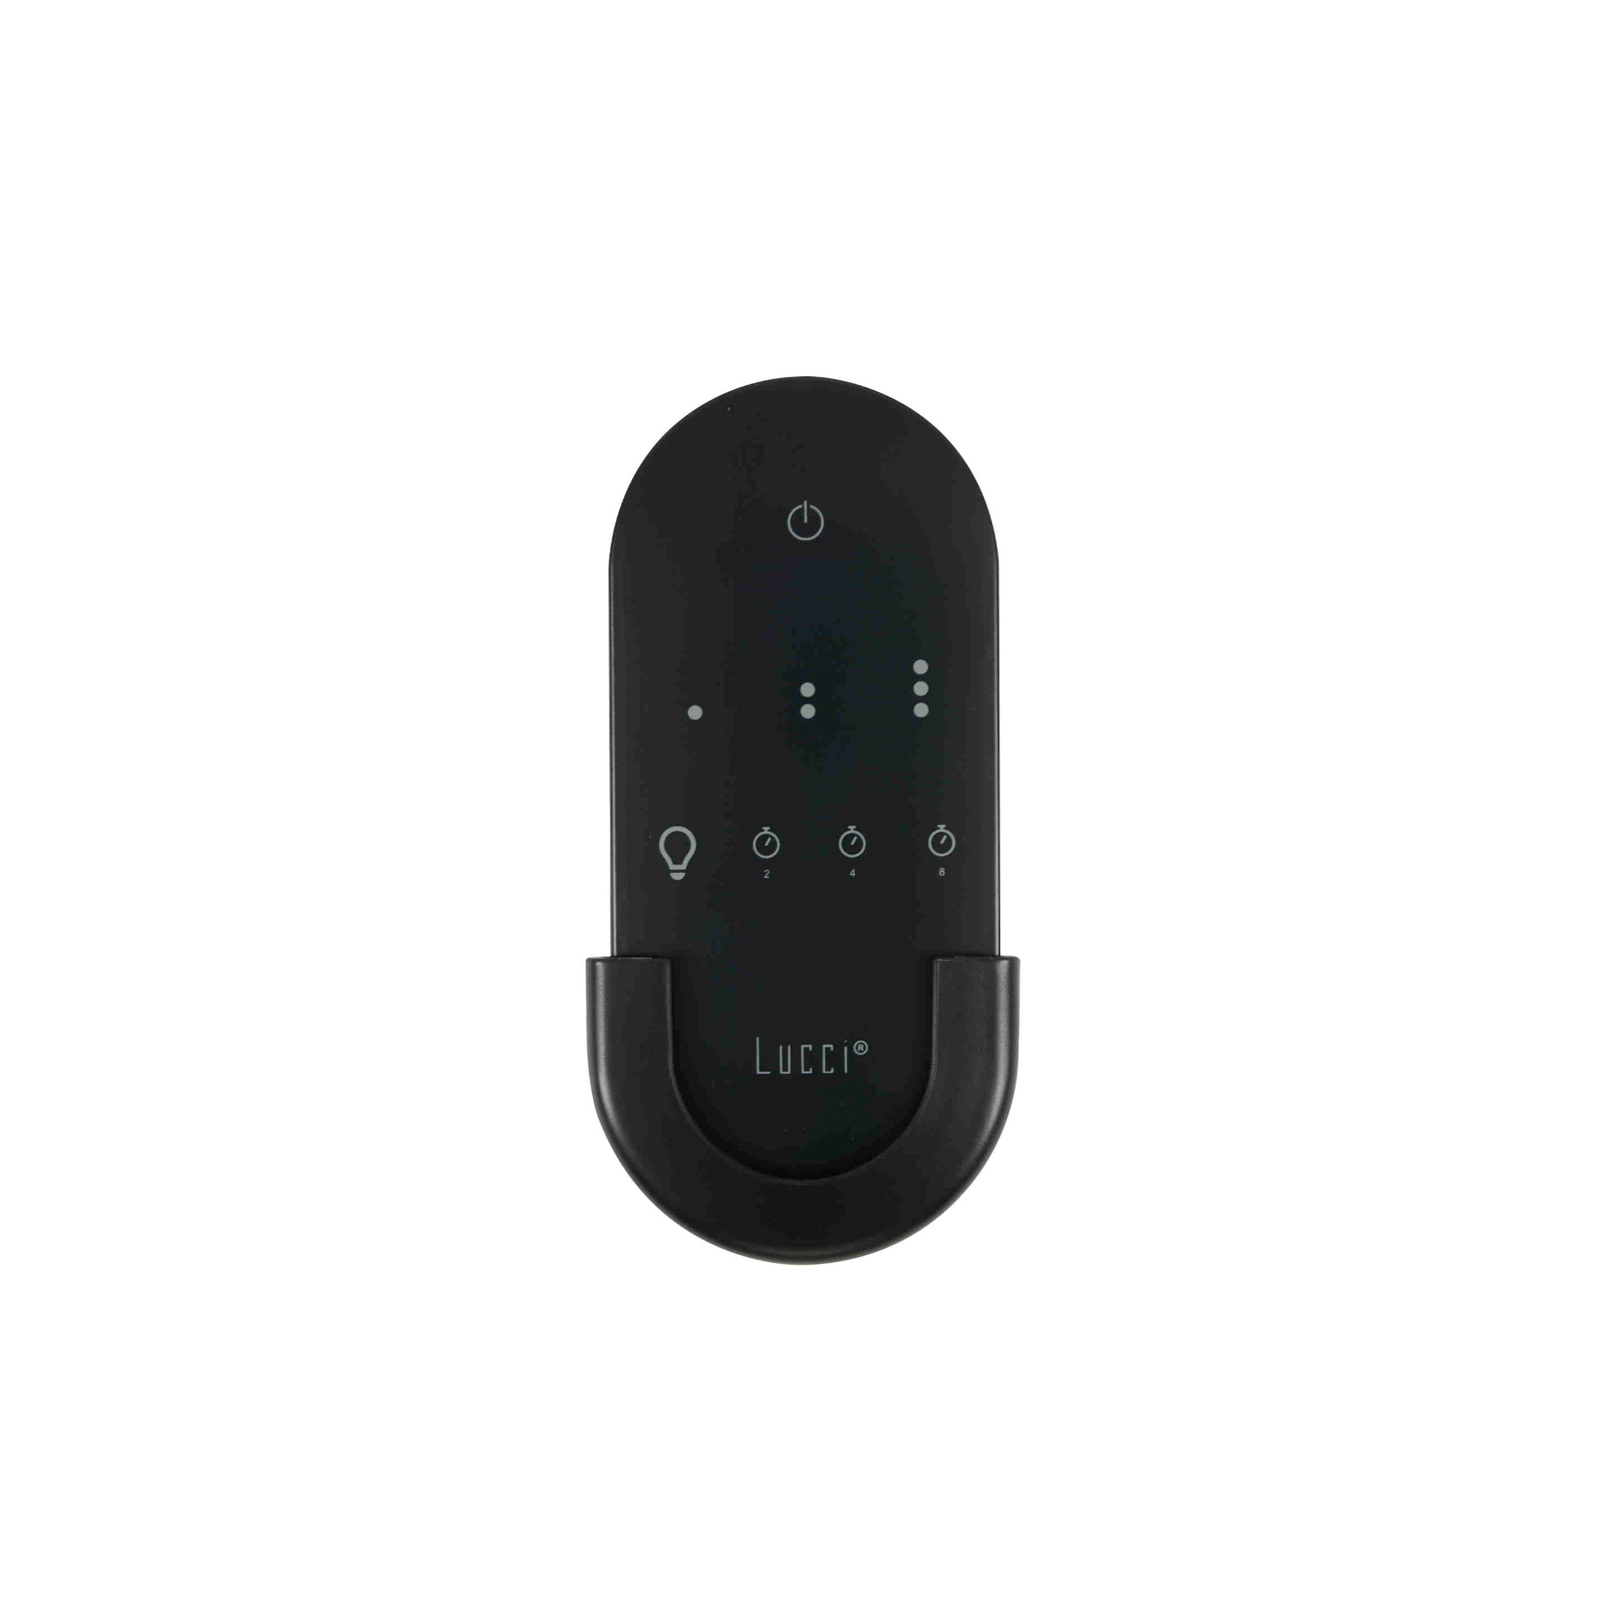 Beacon Lucci Touch remote control black for AC fan